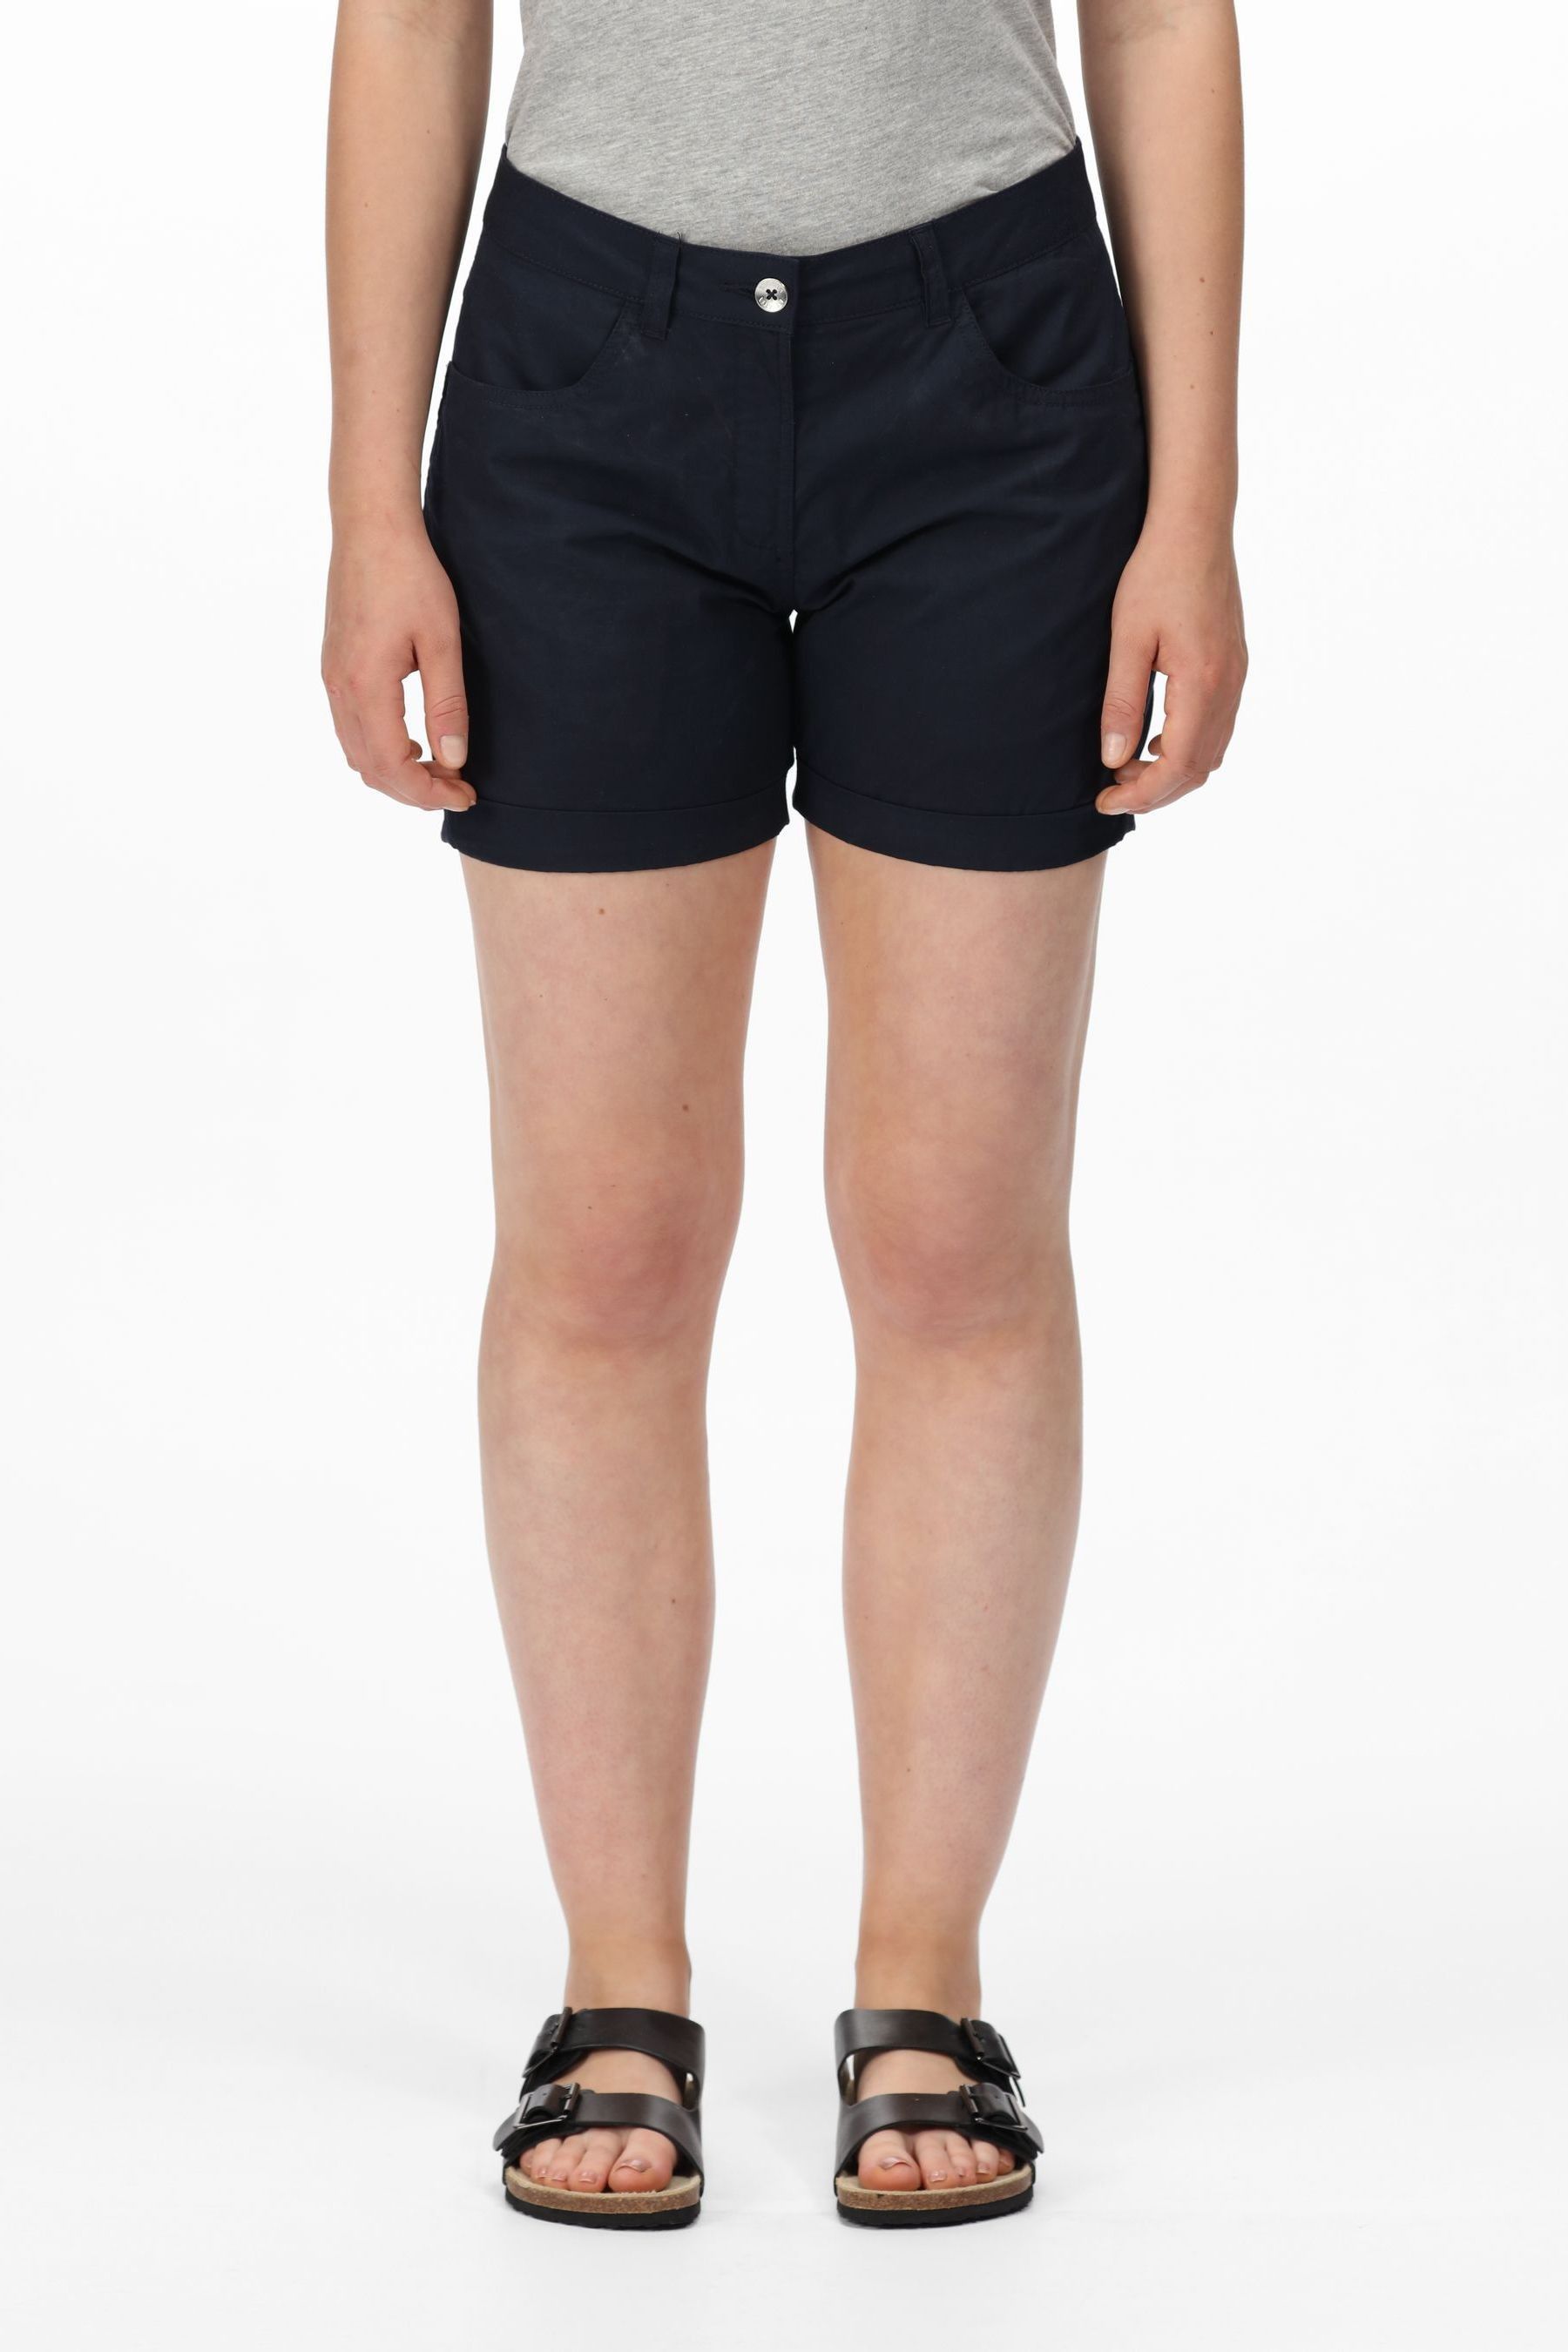 Buy Regatta Pemma Cotton Shorts from the Next UK online shop